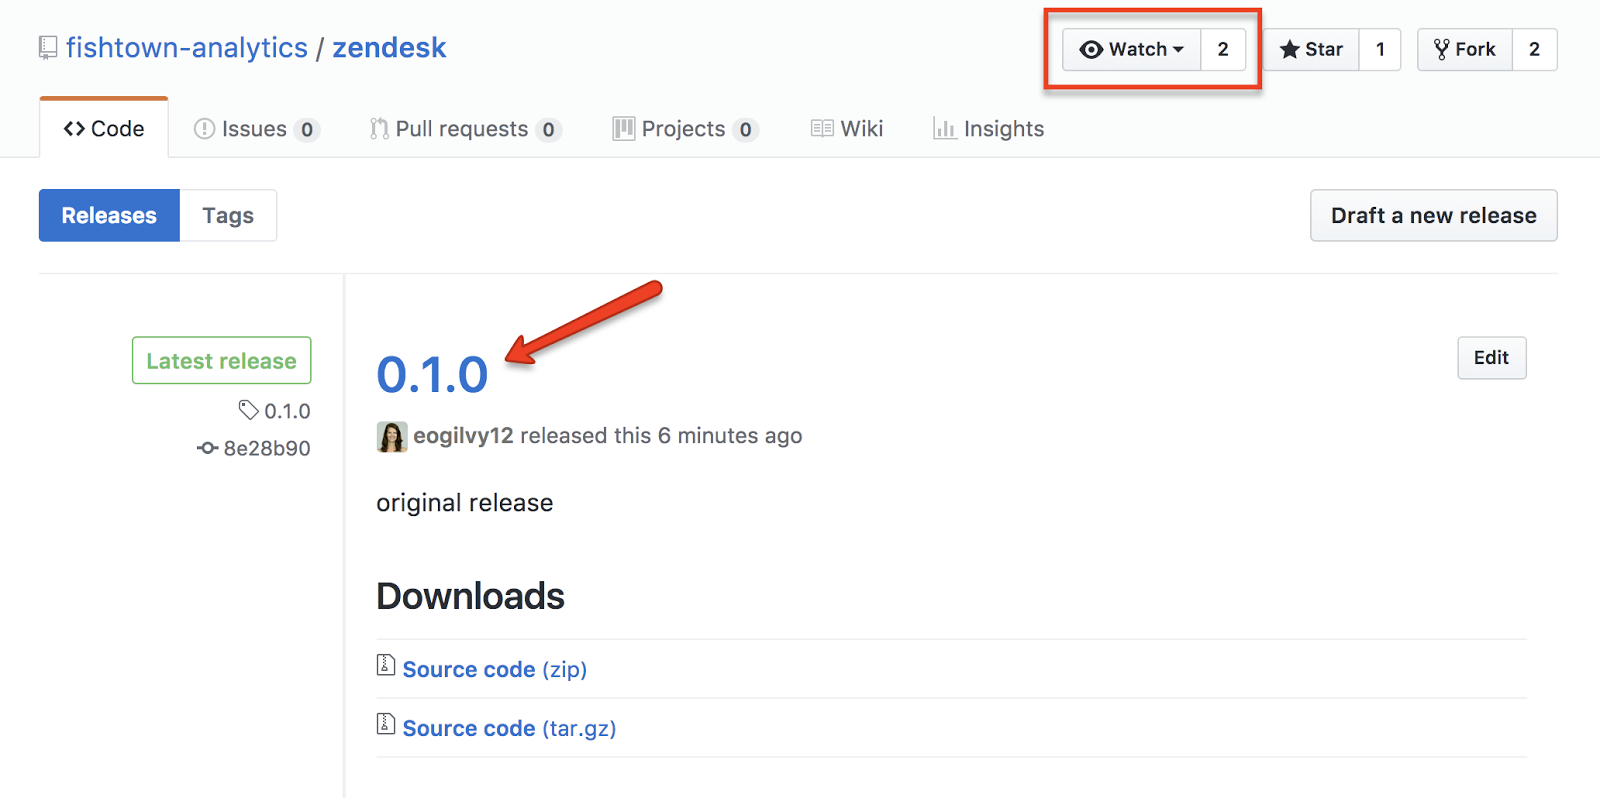 GitHub screenshot showing latest
release